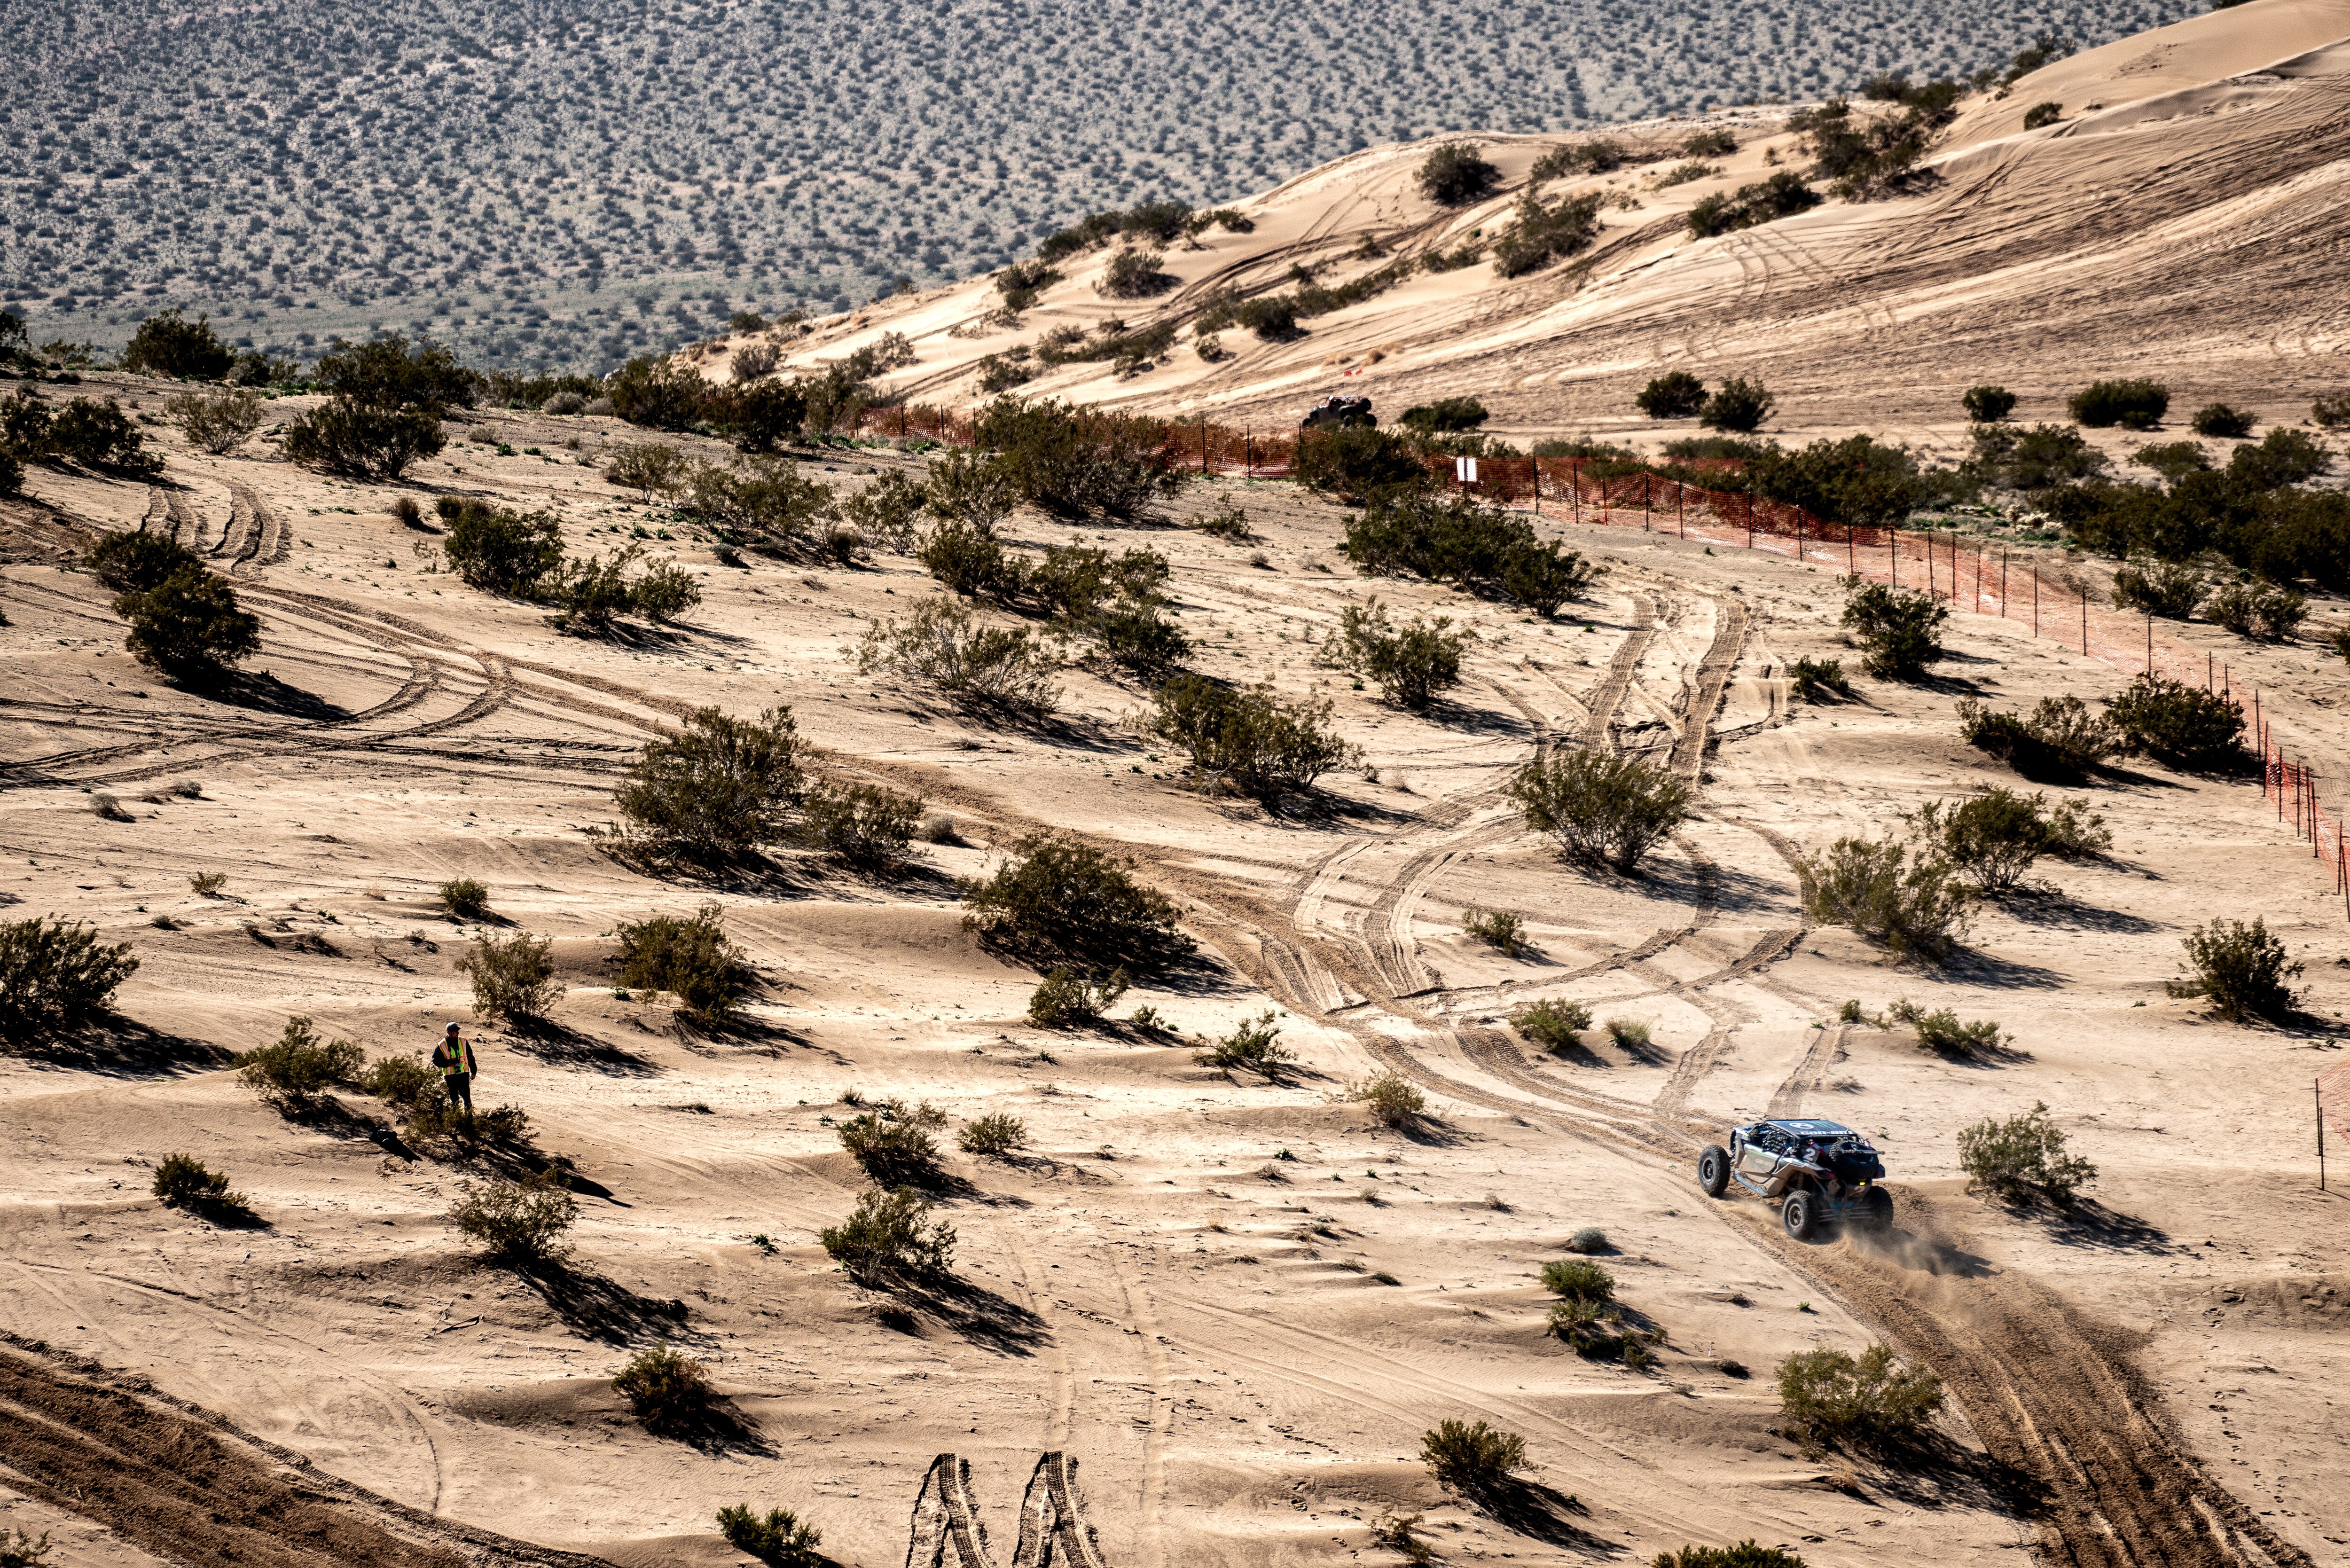 Vehicle racing in the desert